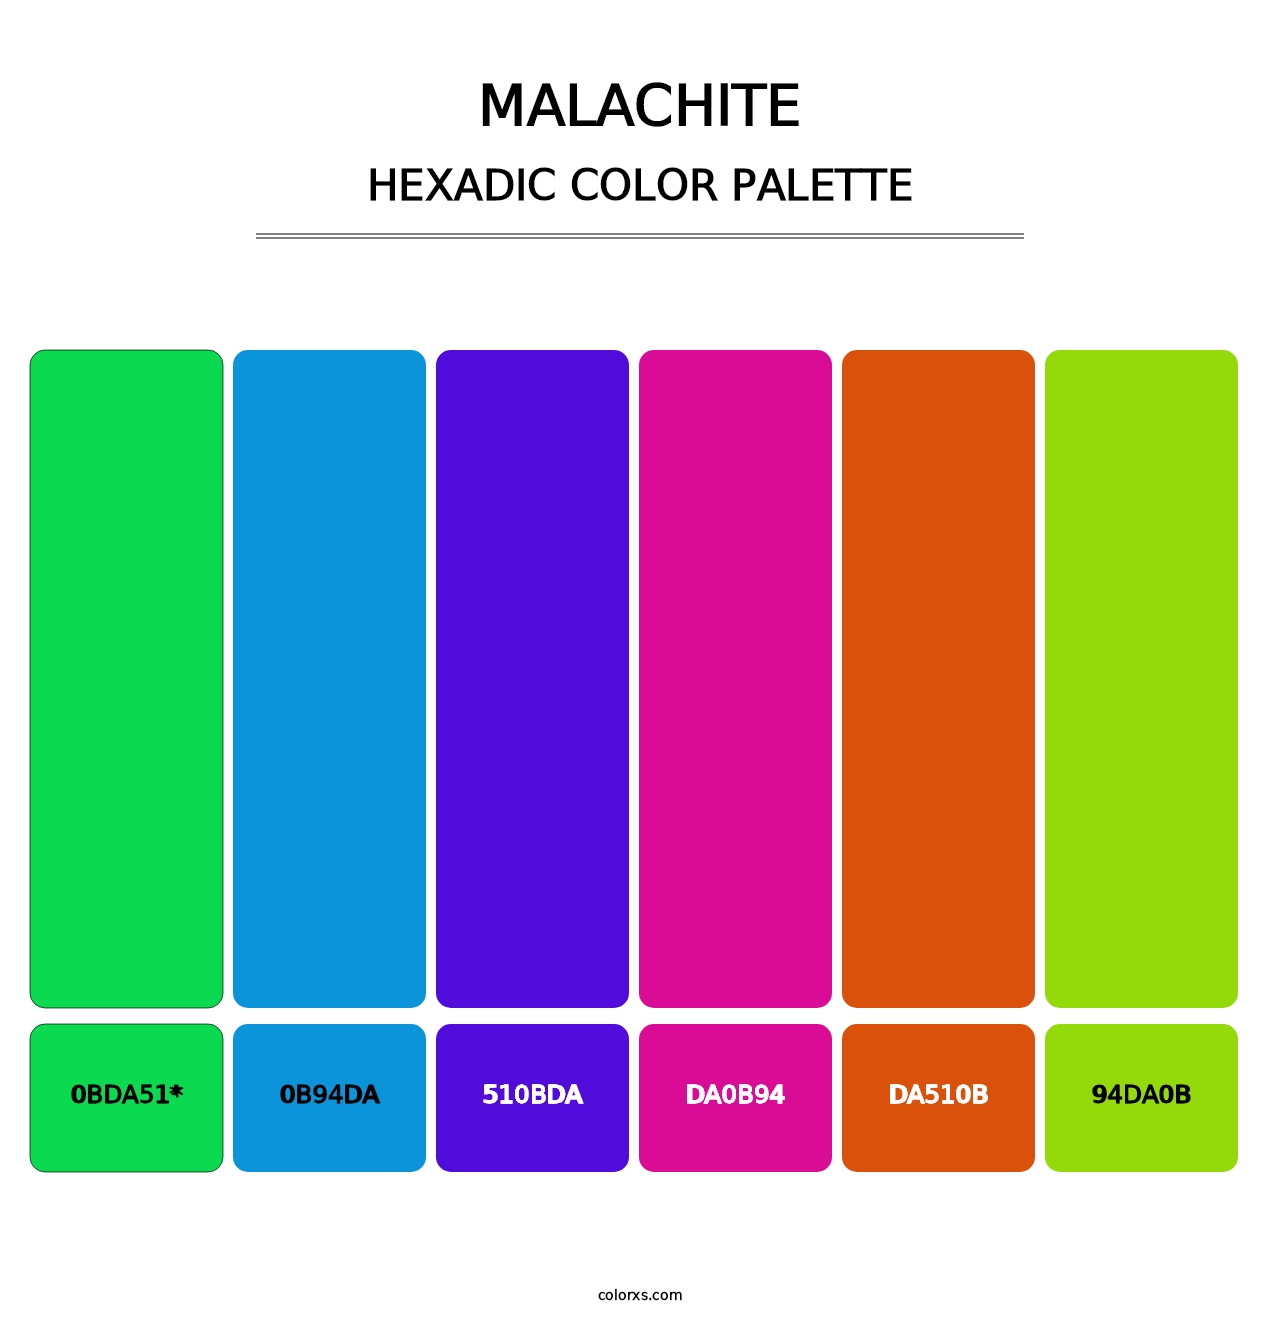 Malachite - Hexadic Color Palette